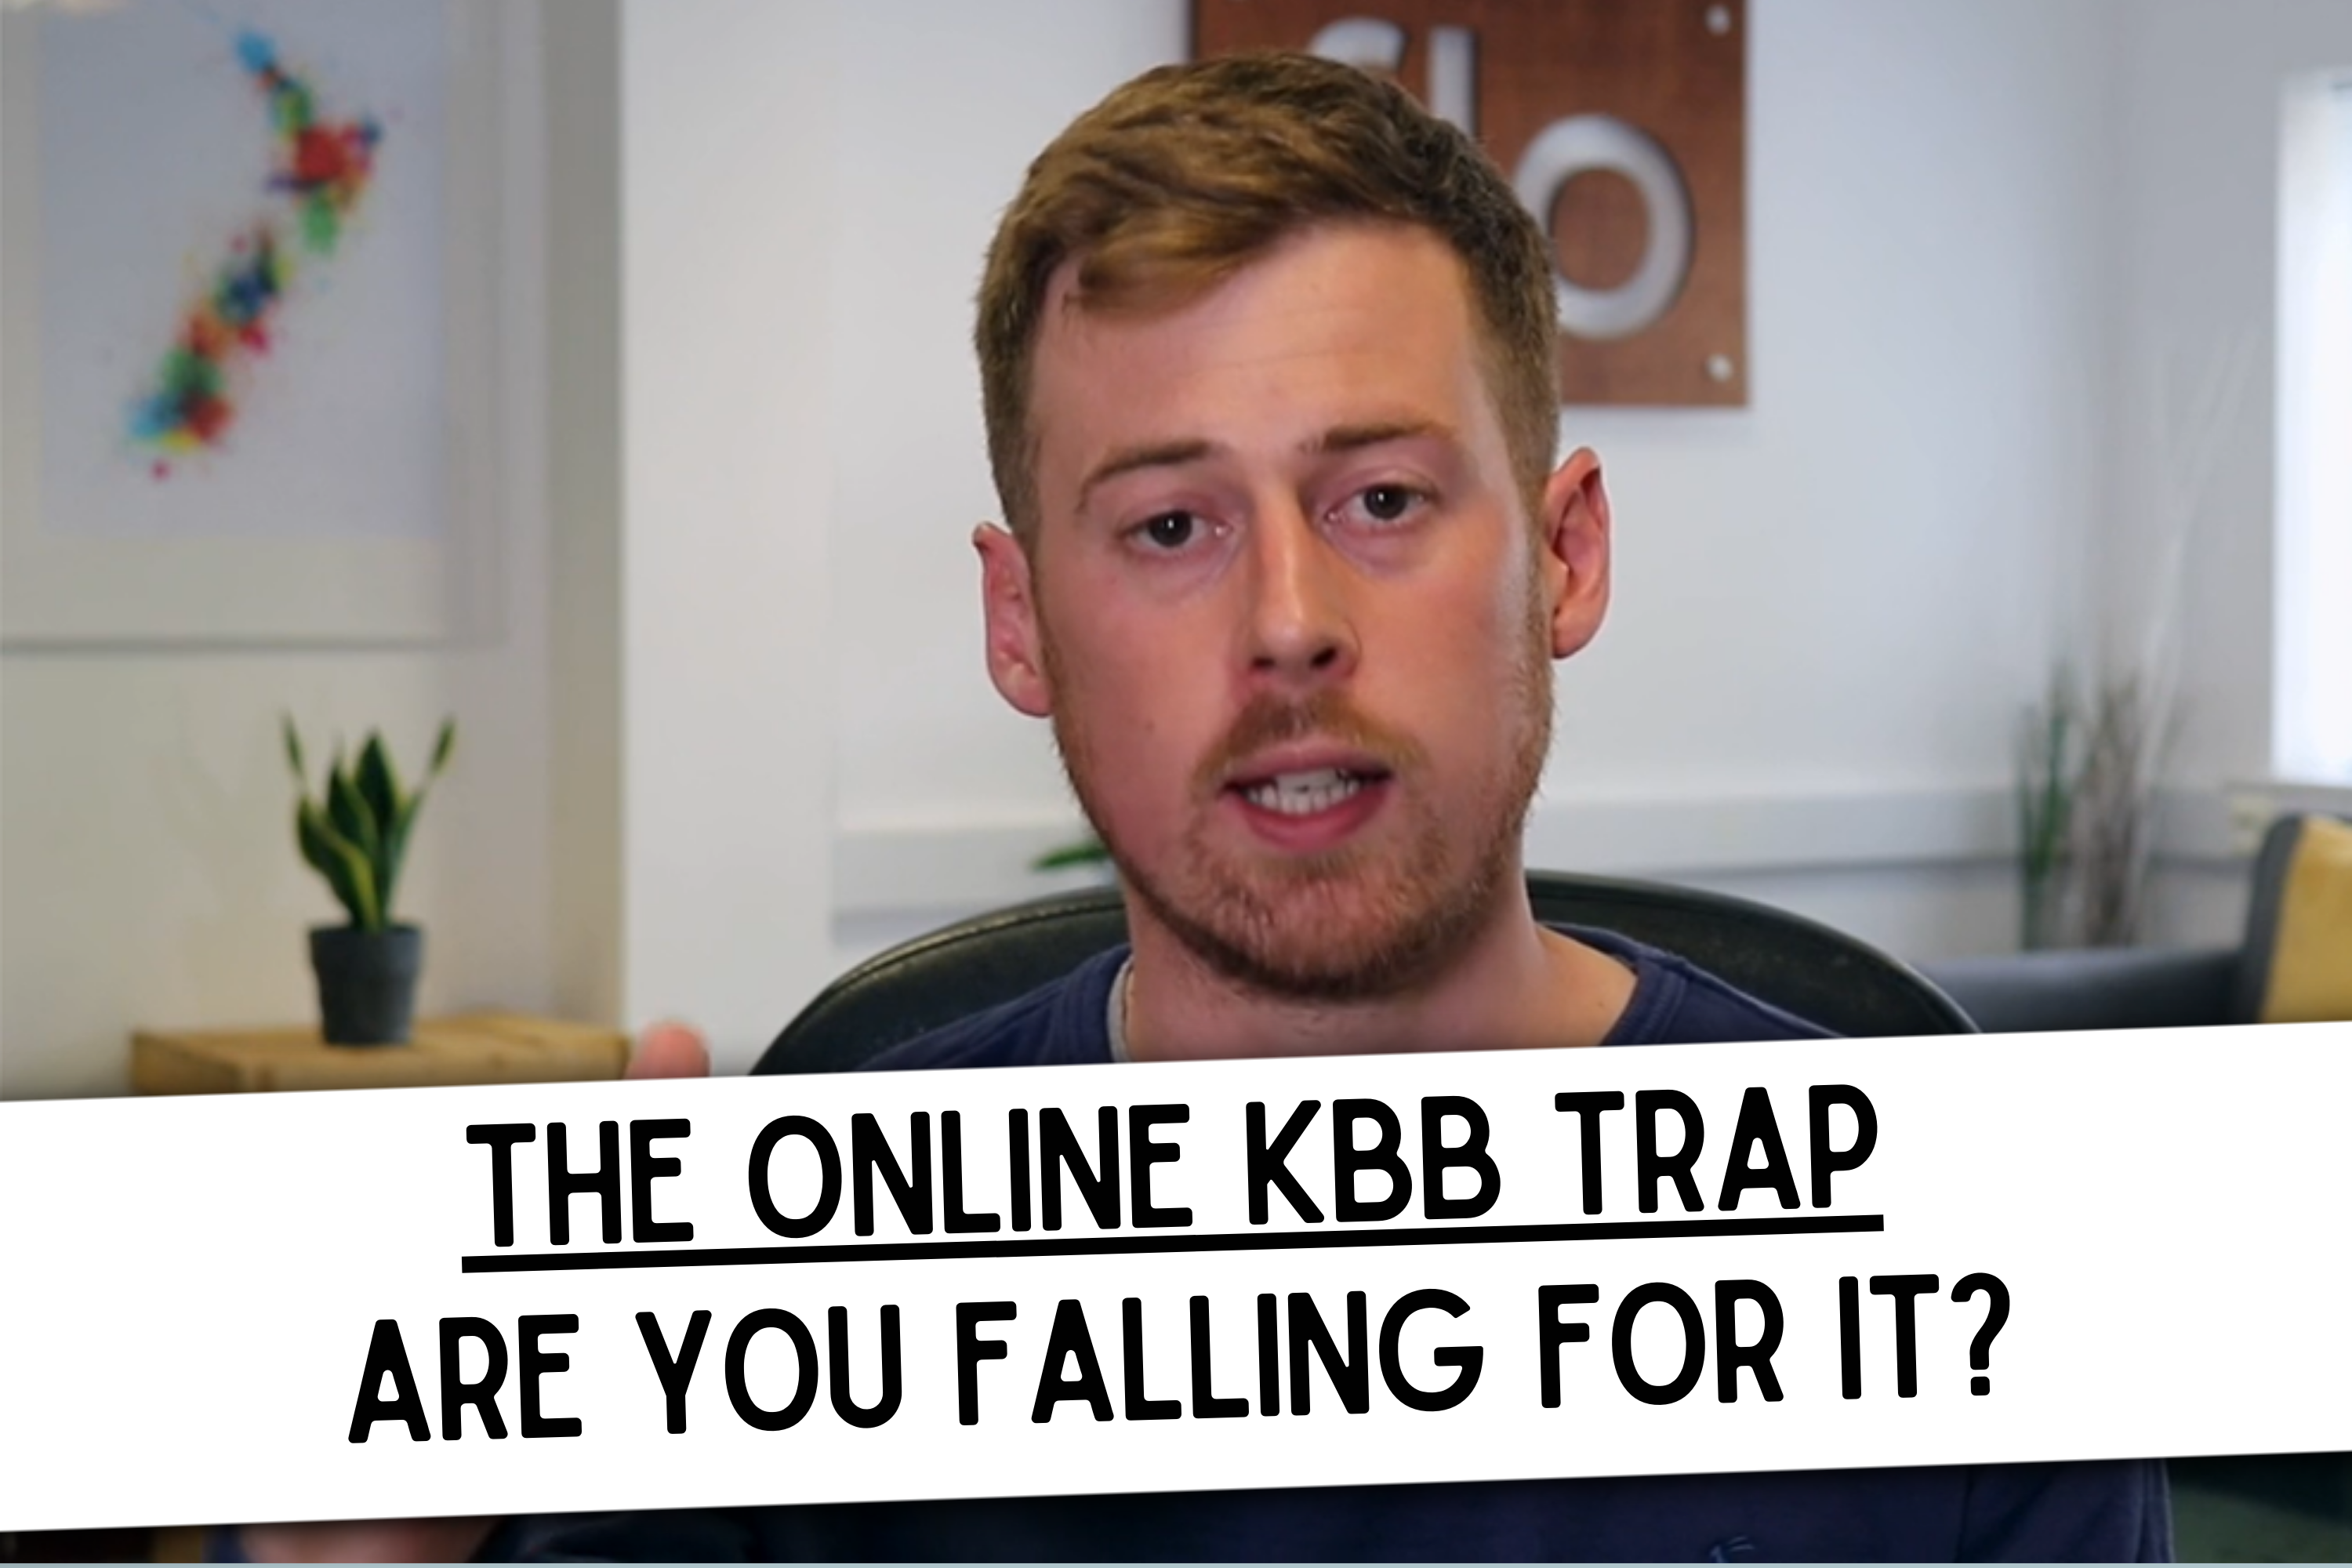 The online KBB trap